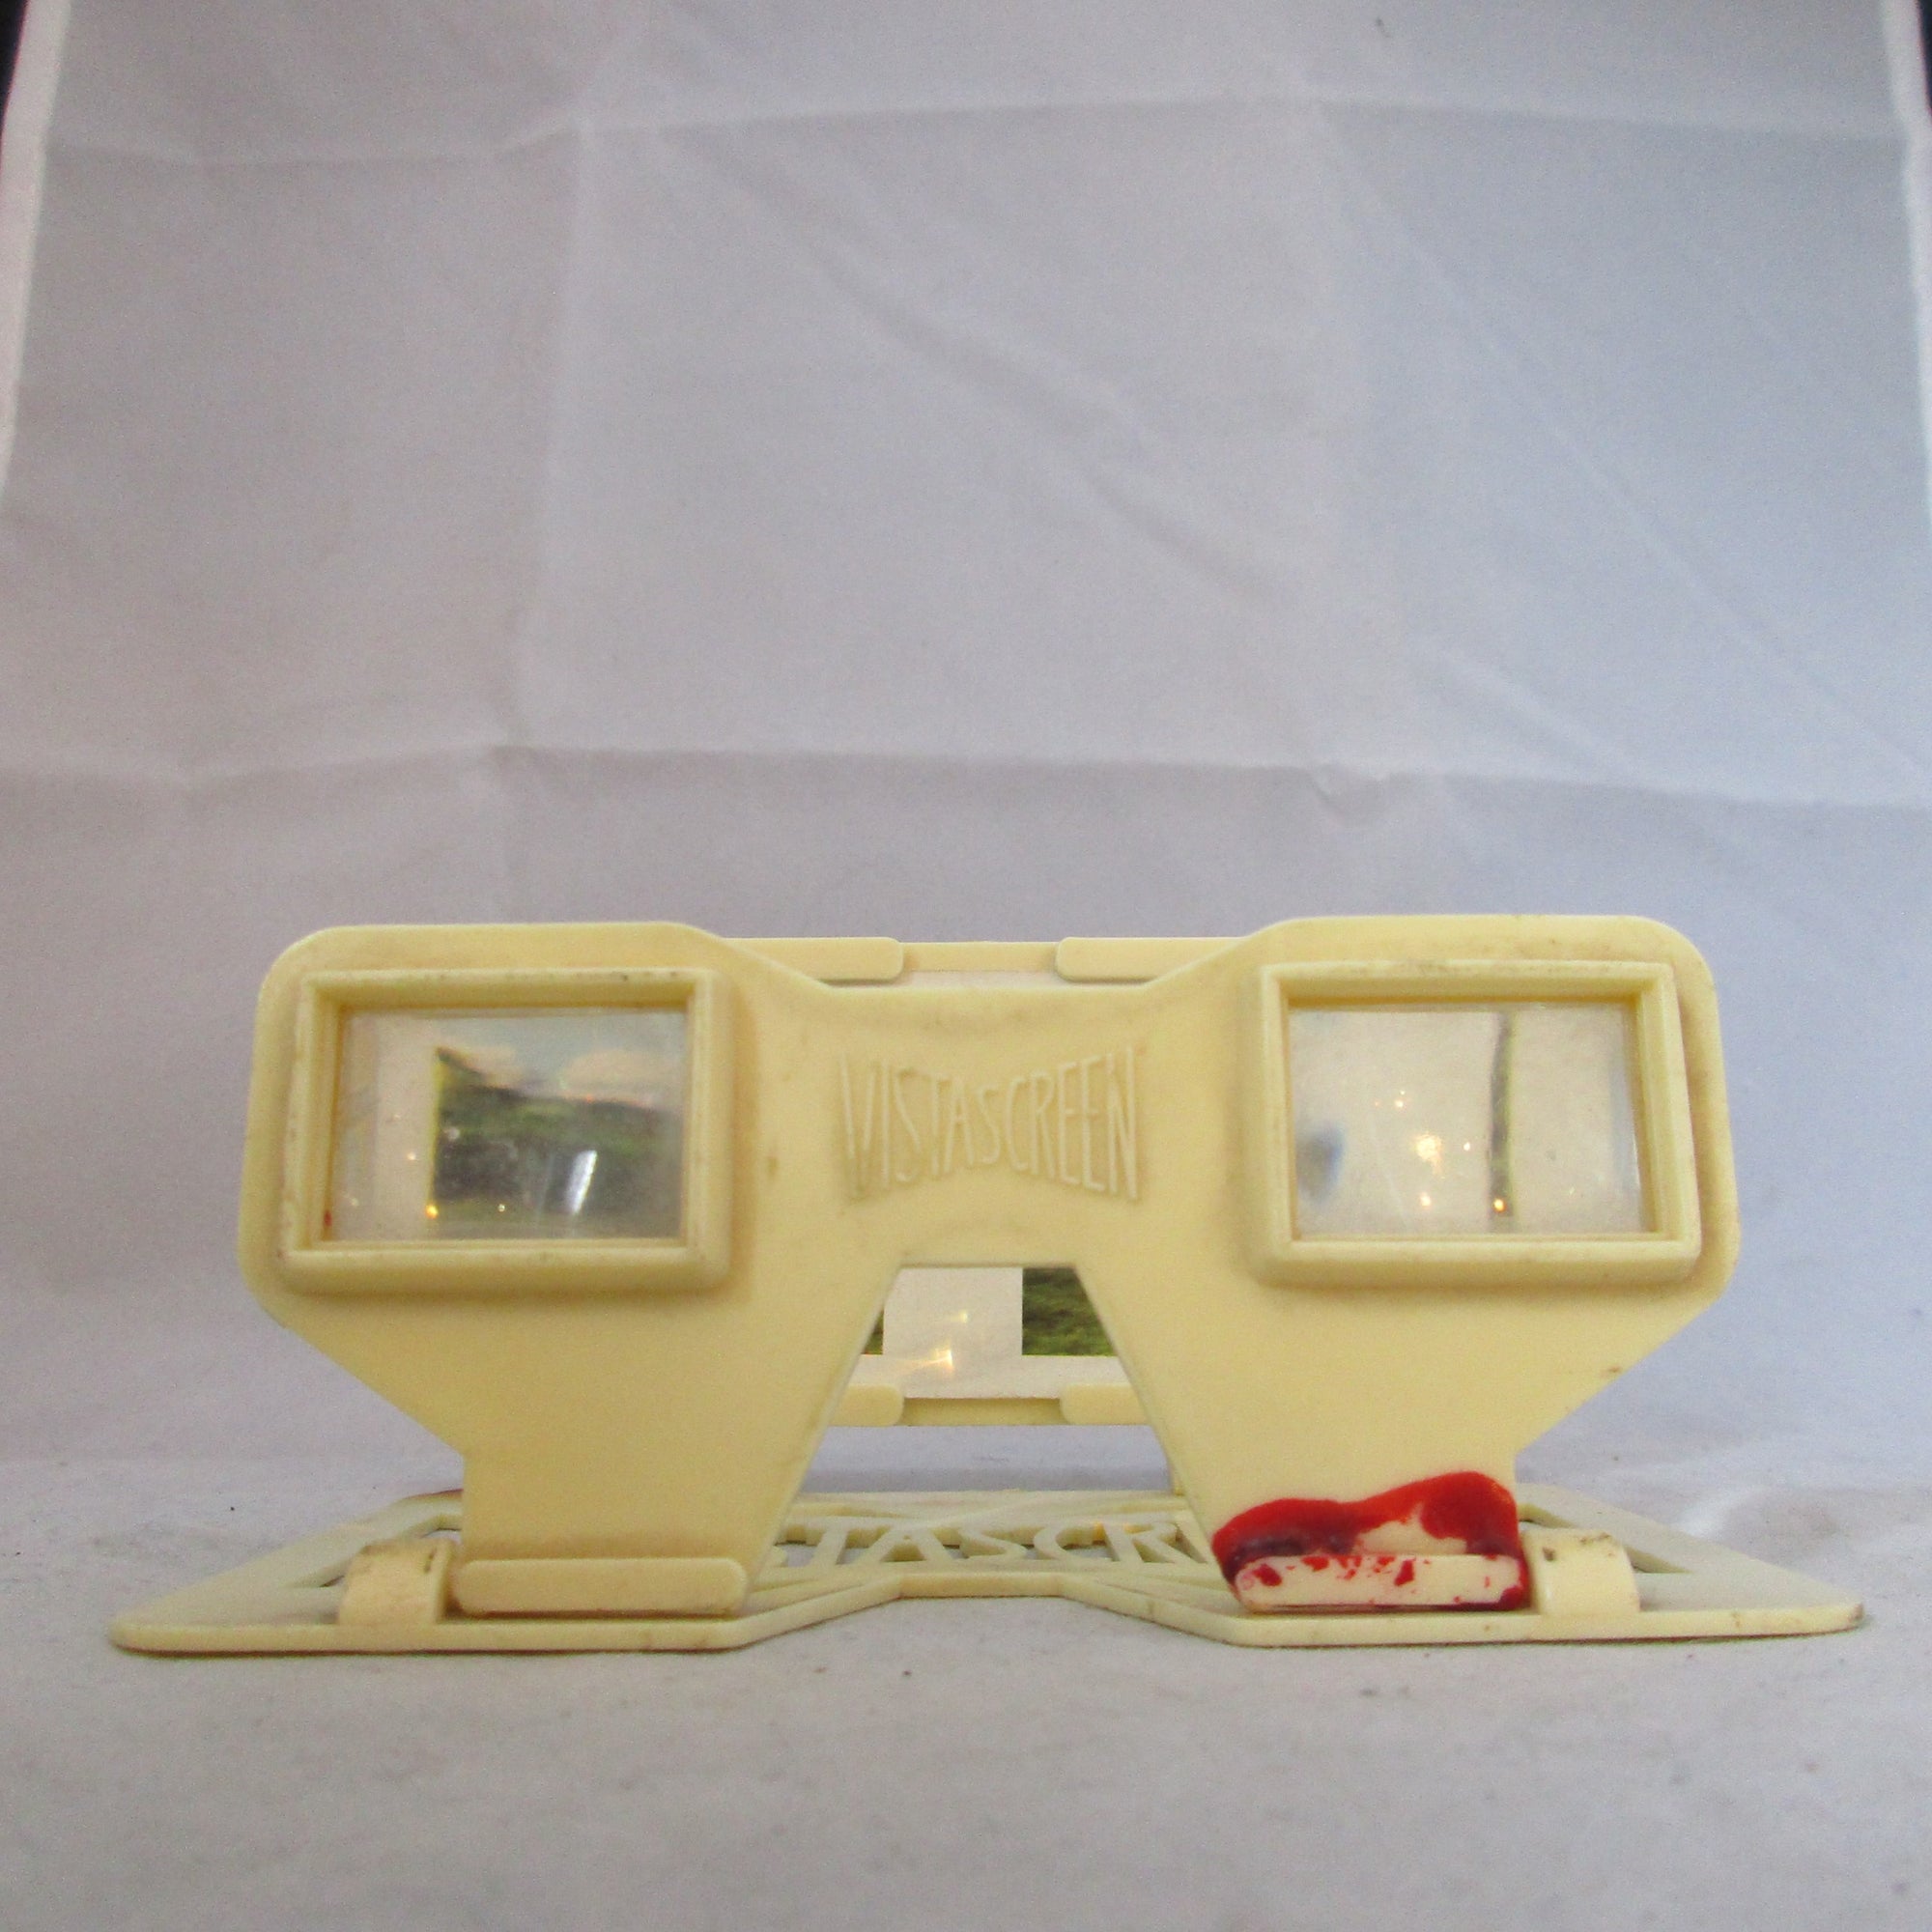 English Plastic Ivory Coloured Weetabix 3D Viewer c1960.